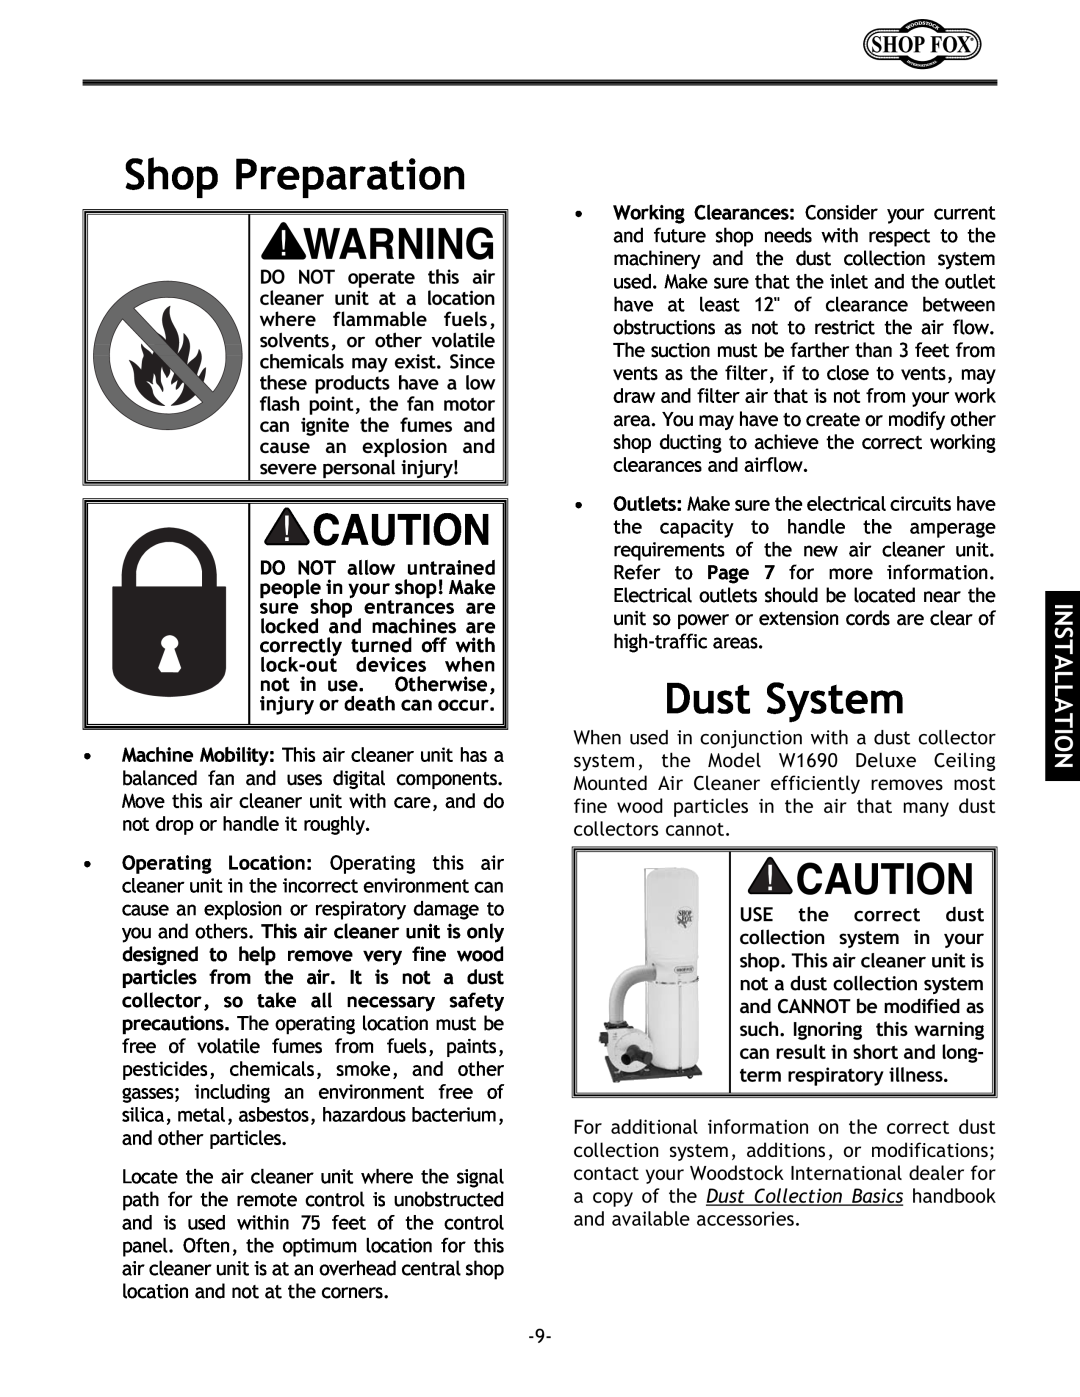 Woodstock W1690 instruction manual Shop Preparation, Dust System, Installation 